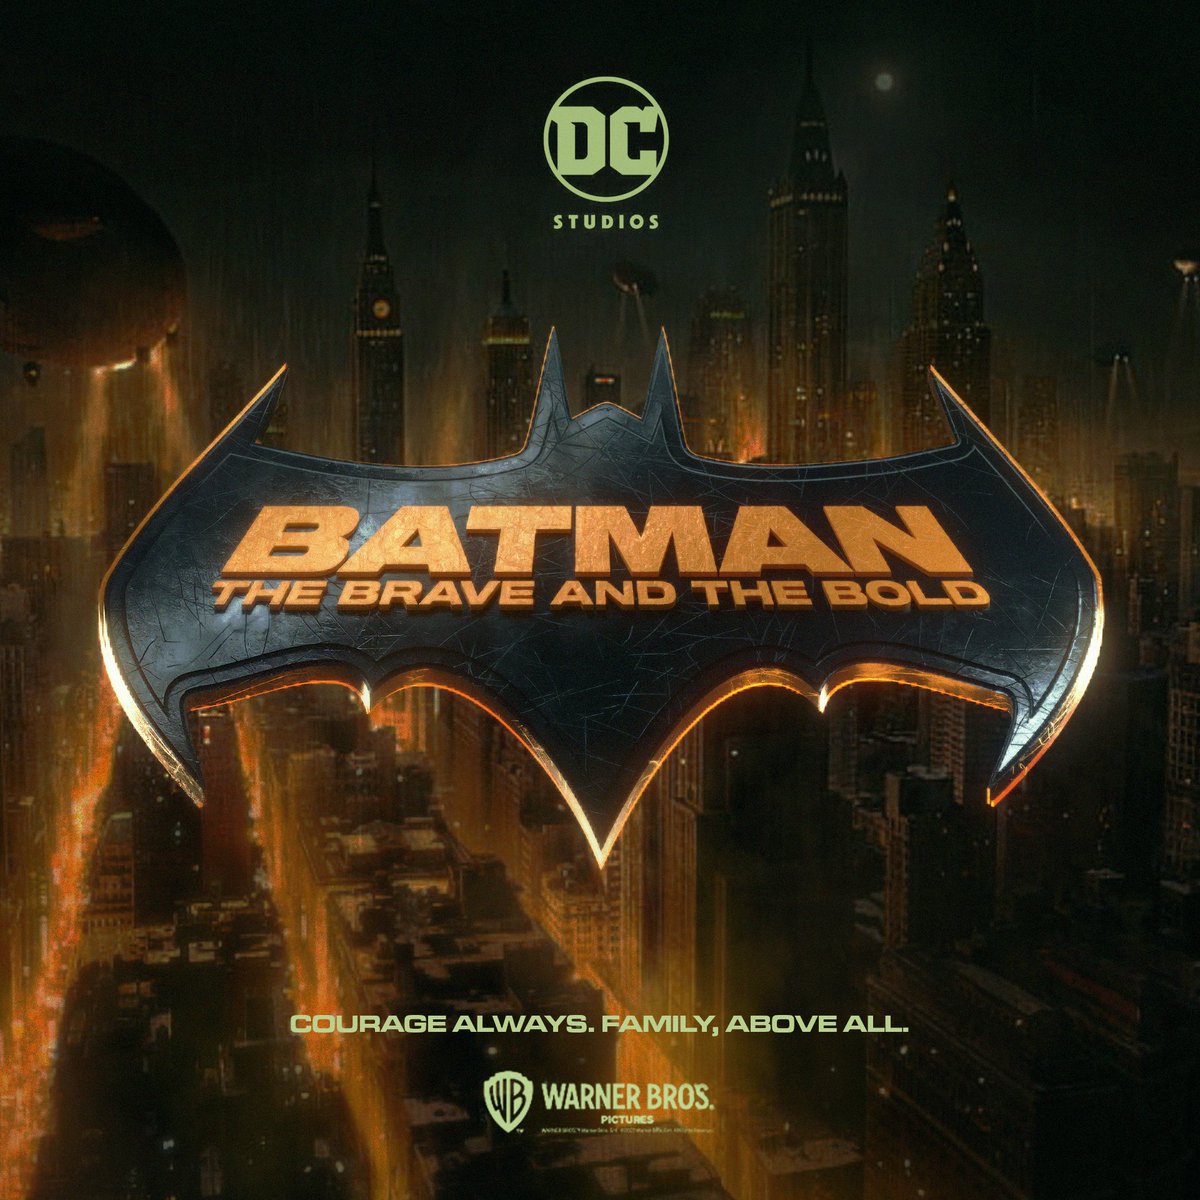 🚨NEW #TOTALRECASTPOD🚨

EPISODE 6 -- BATMAN (Franchise)
'I'm Batman.'

Sailor and Duke discuss Ben Affleck's Batman before recasting the franchise's key roles for the DCU's #TheBraveAndTheBold!

🎧Listen now! | #PodNation & #SHPOLL23
🟢spoti.fi/3Sd1BEr
➕Google & Amazon